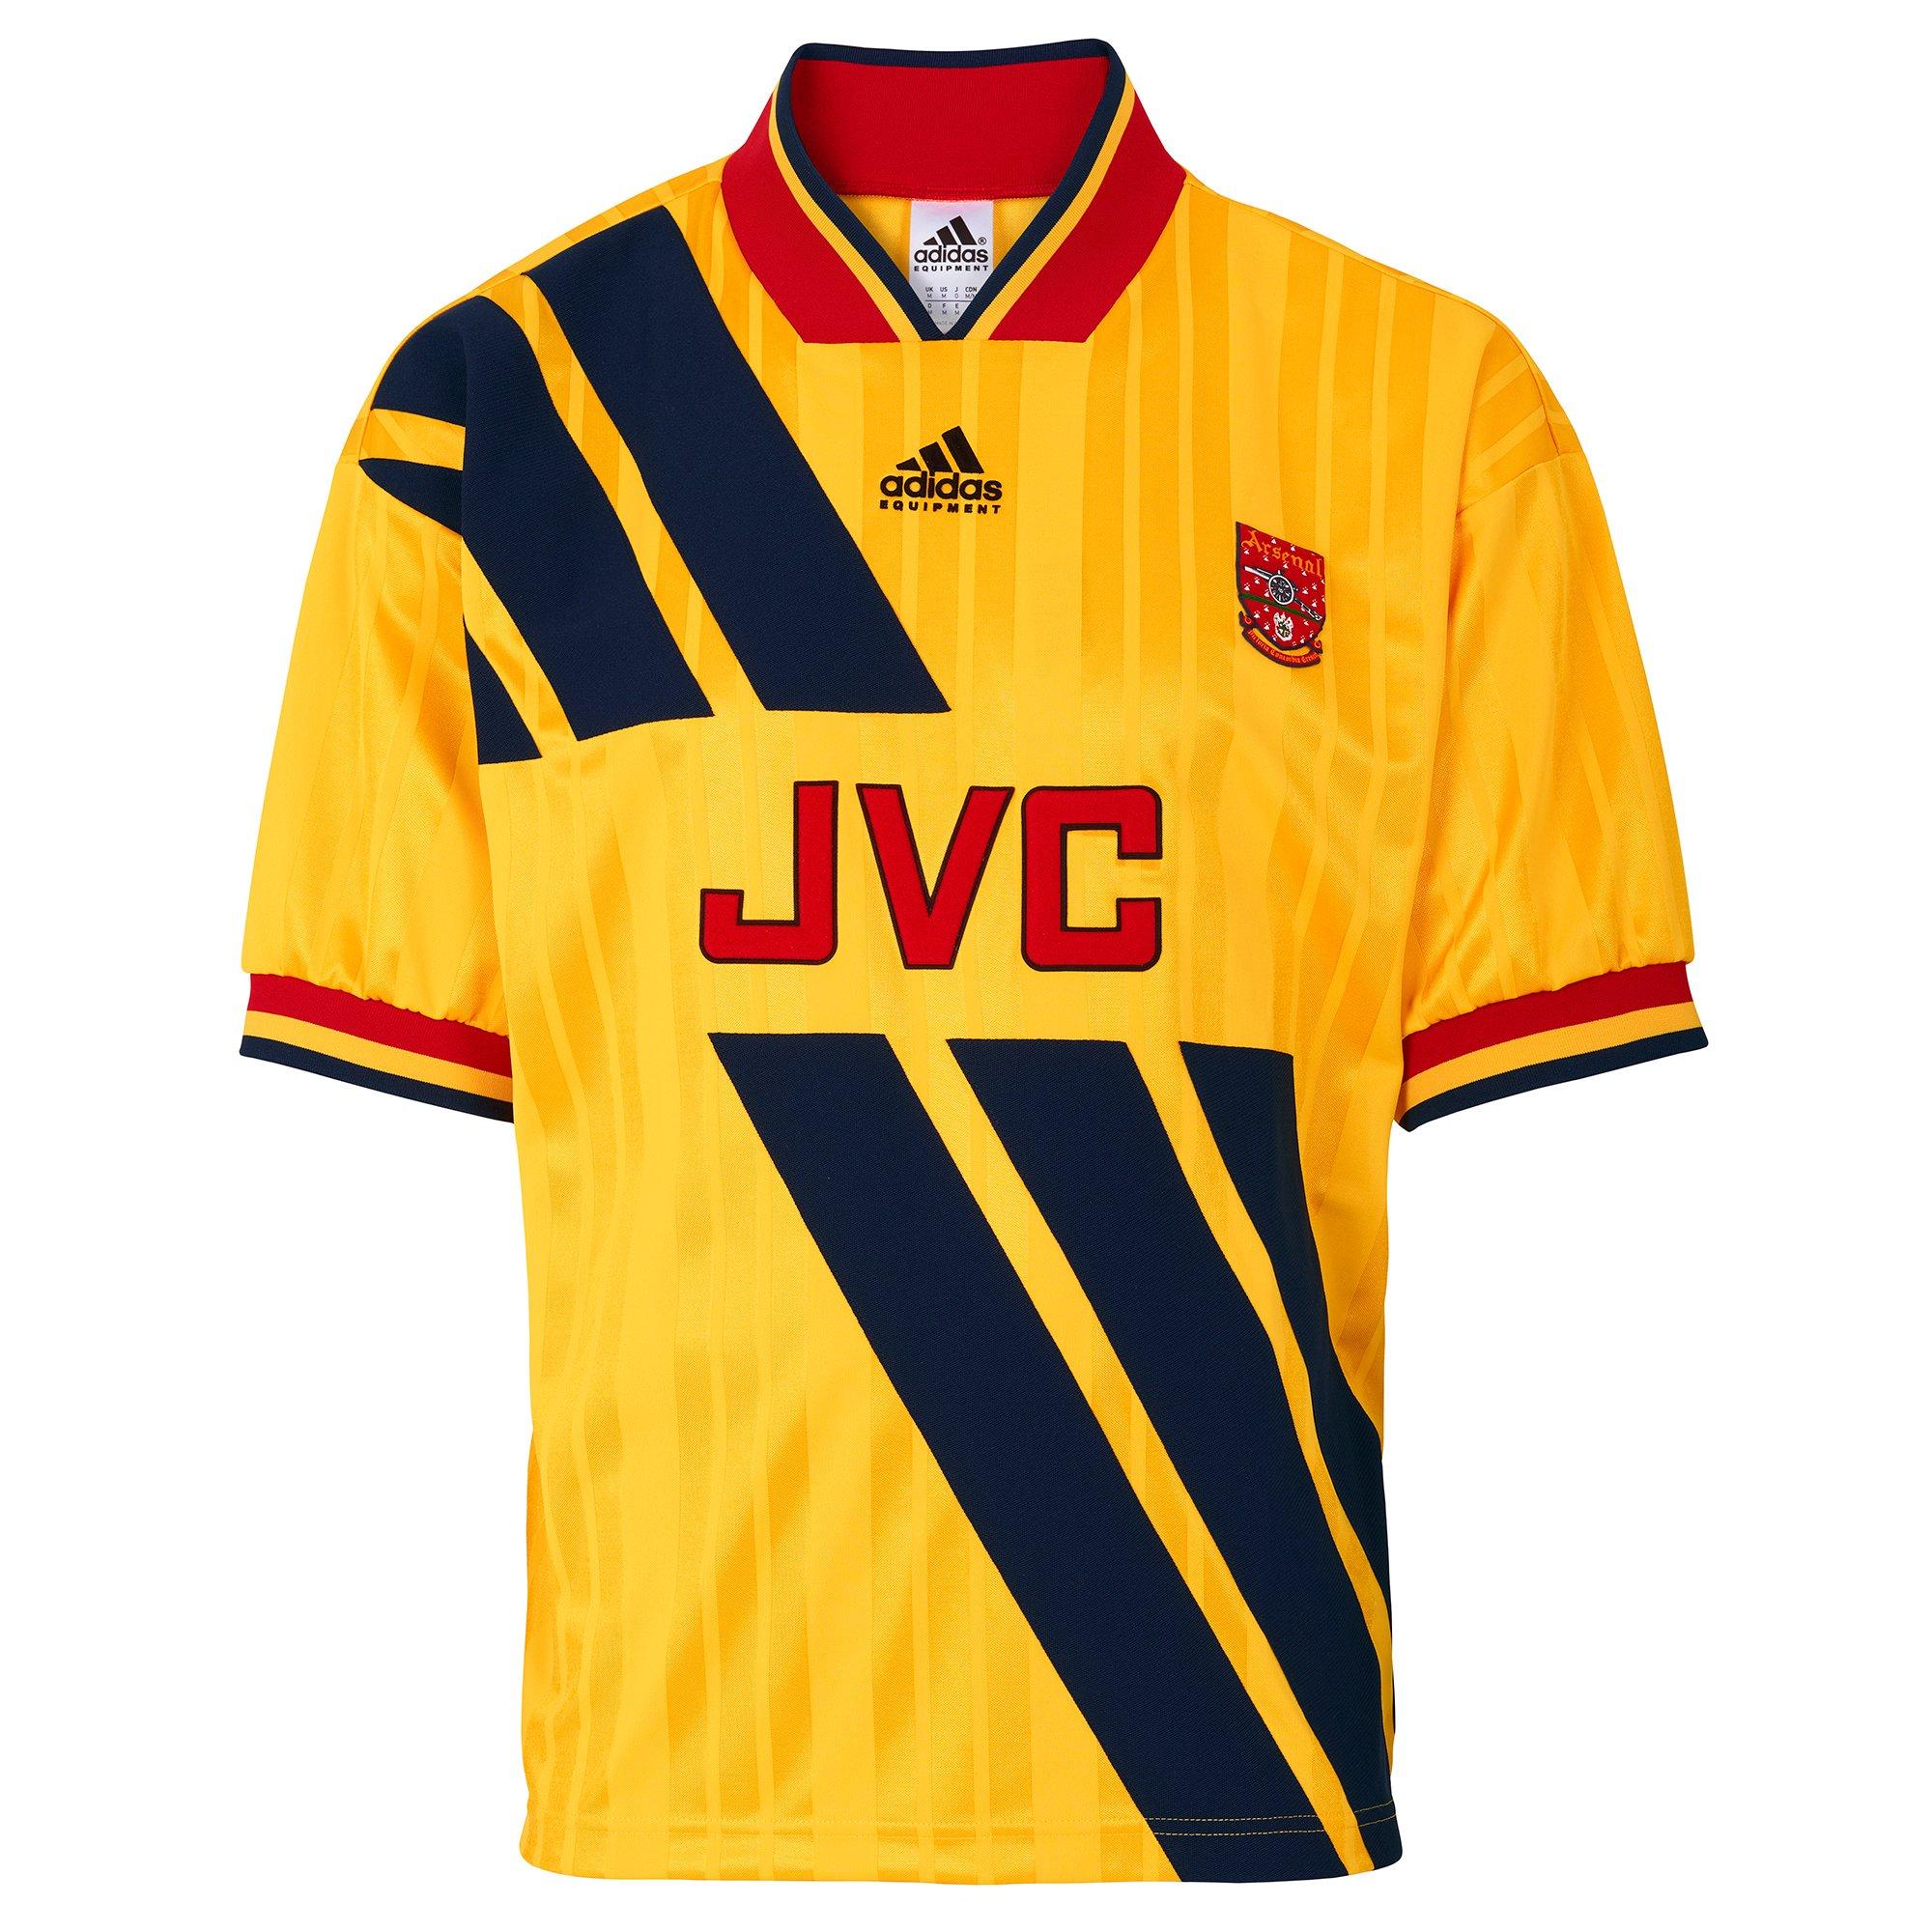 100% authentic Arsenal retro kit!!